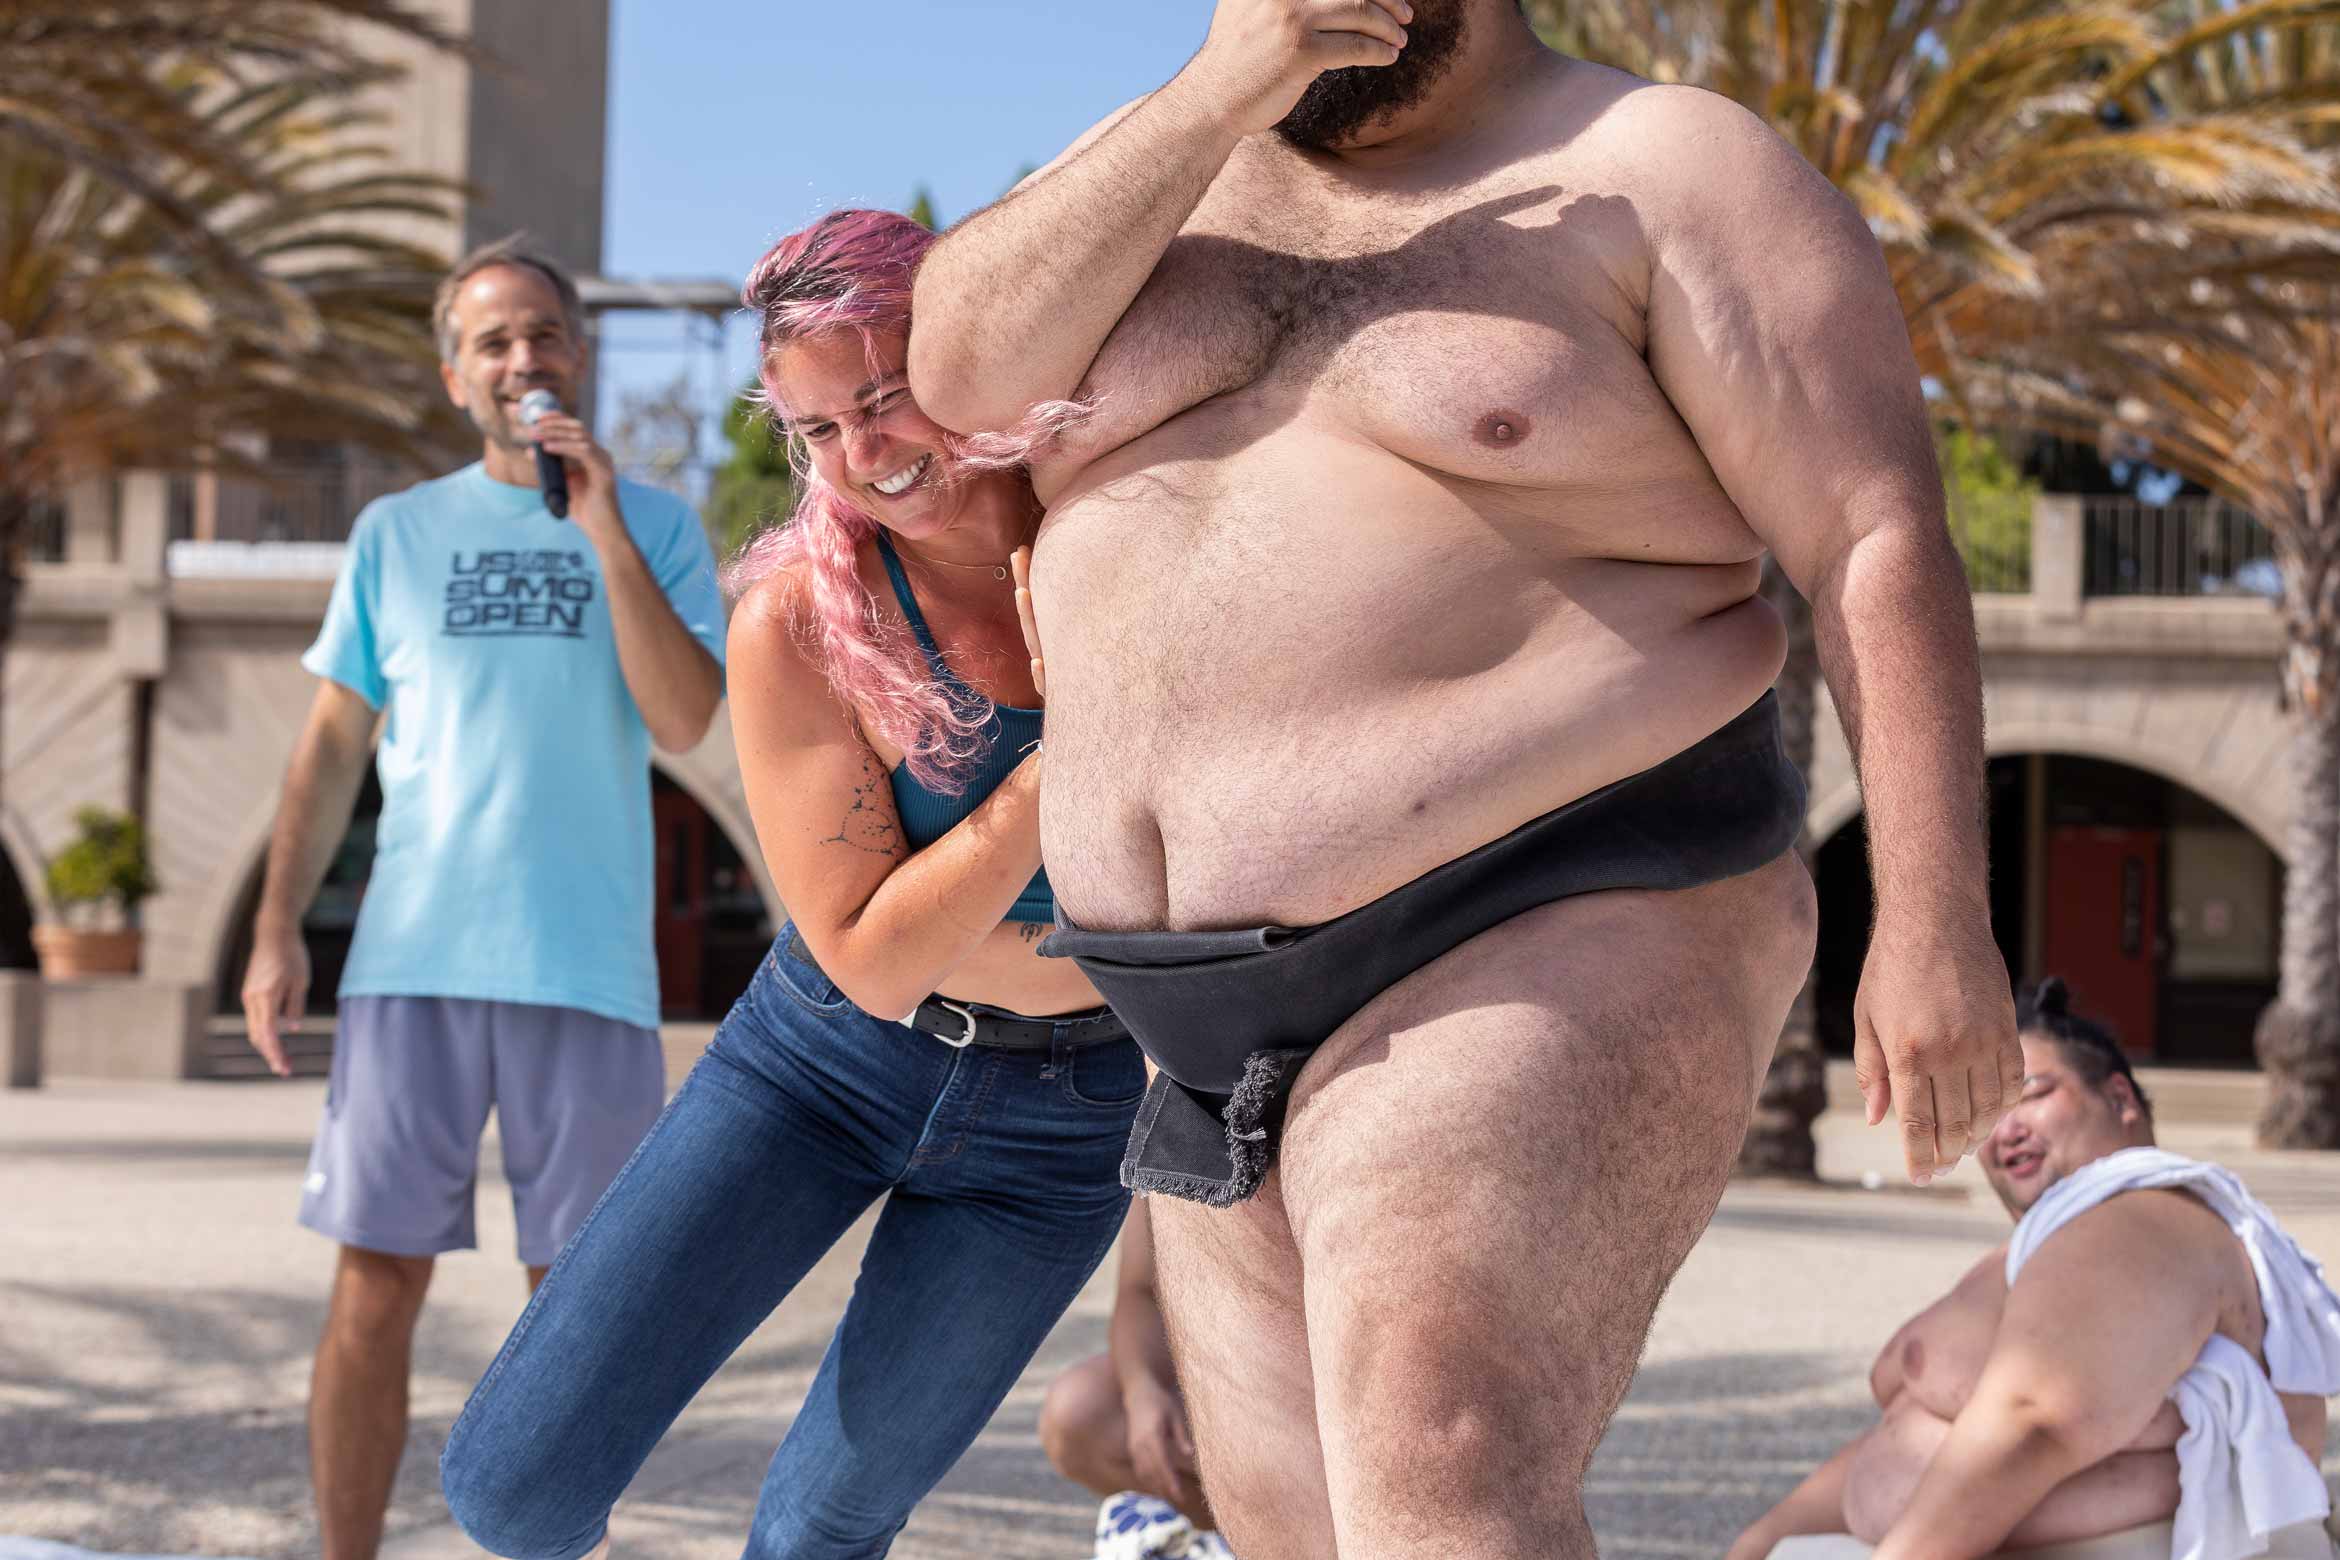 staff member wrestles a sumo